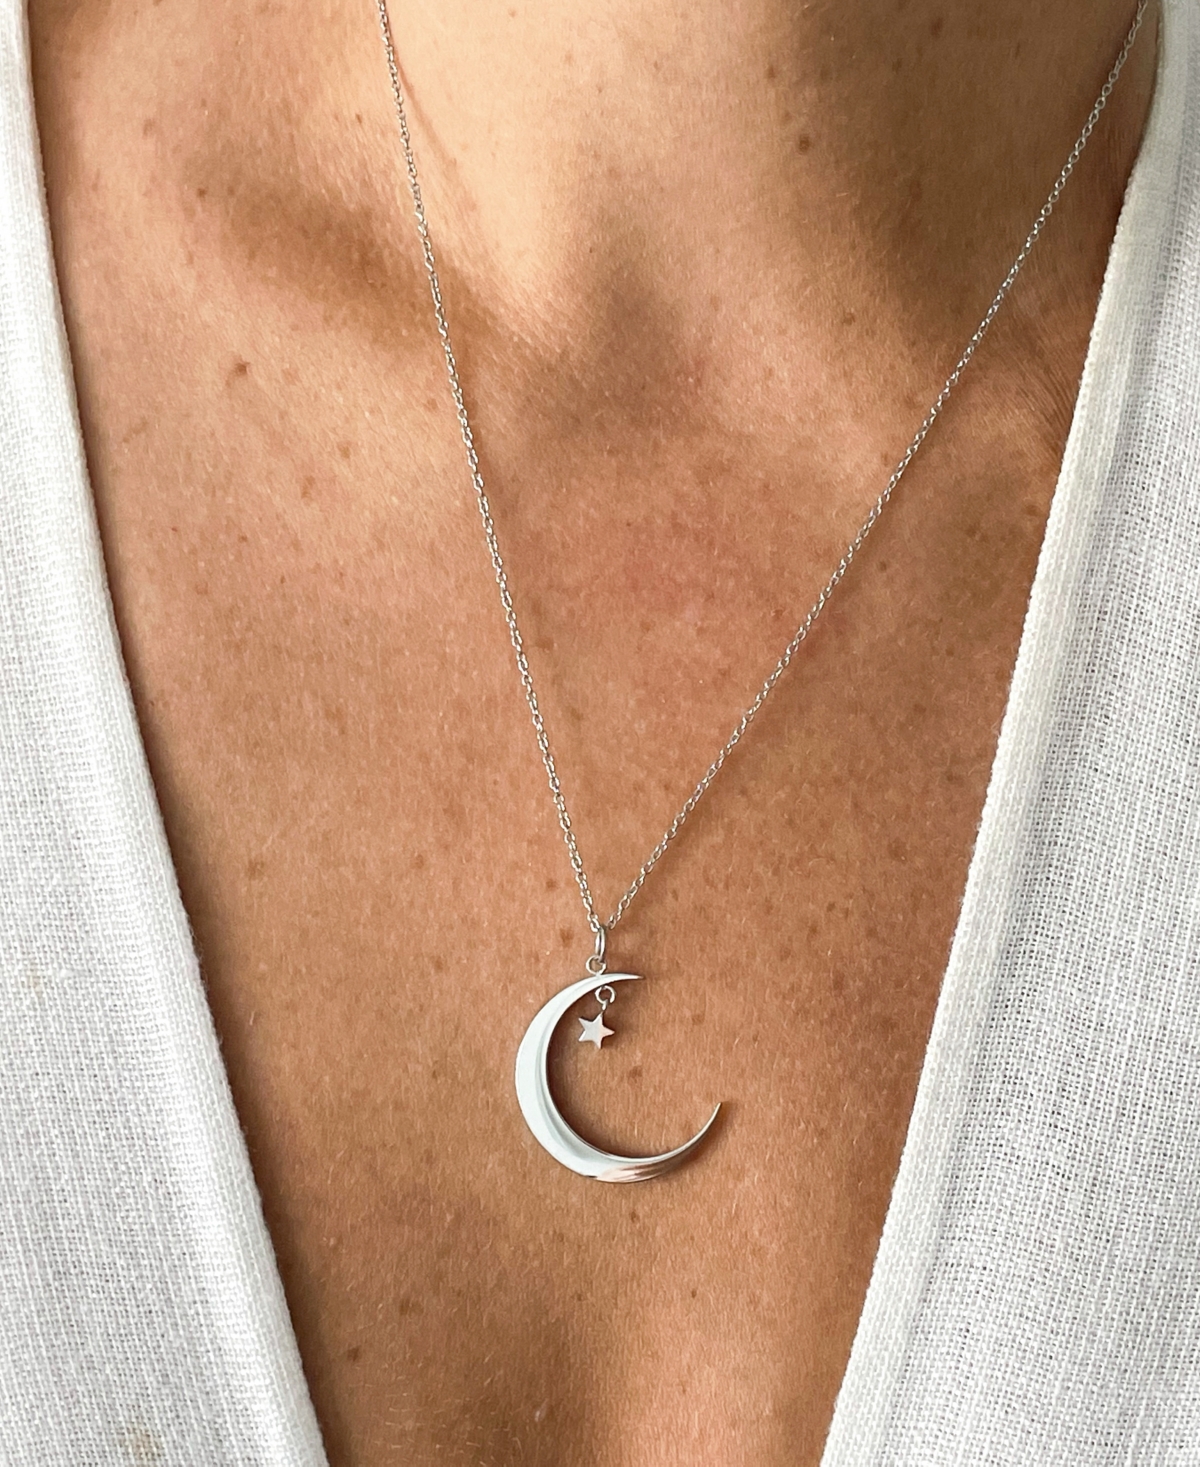 Shop Adornia Silver-tone Hanging Moon & Star Pendant Necklace, 16" + 2" Extender